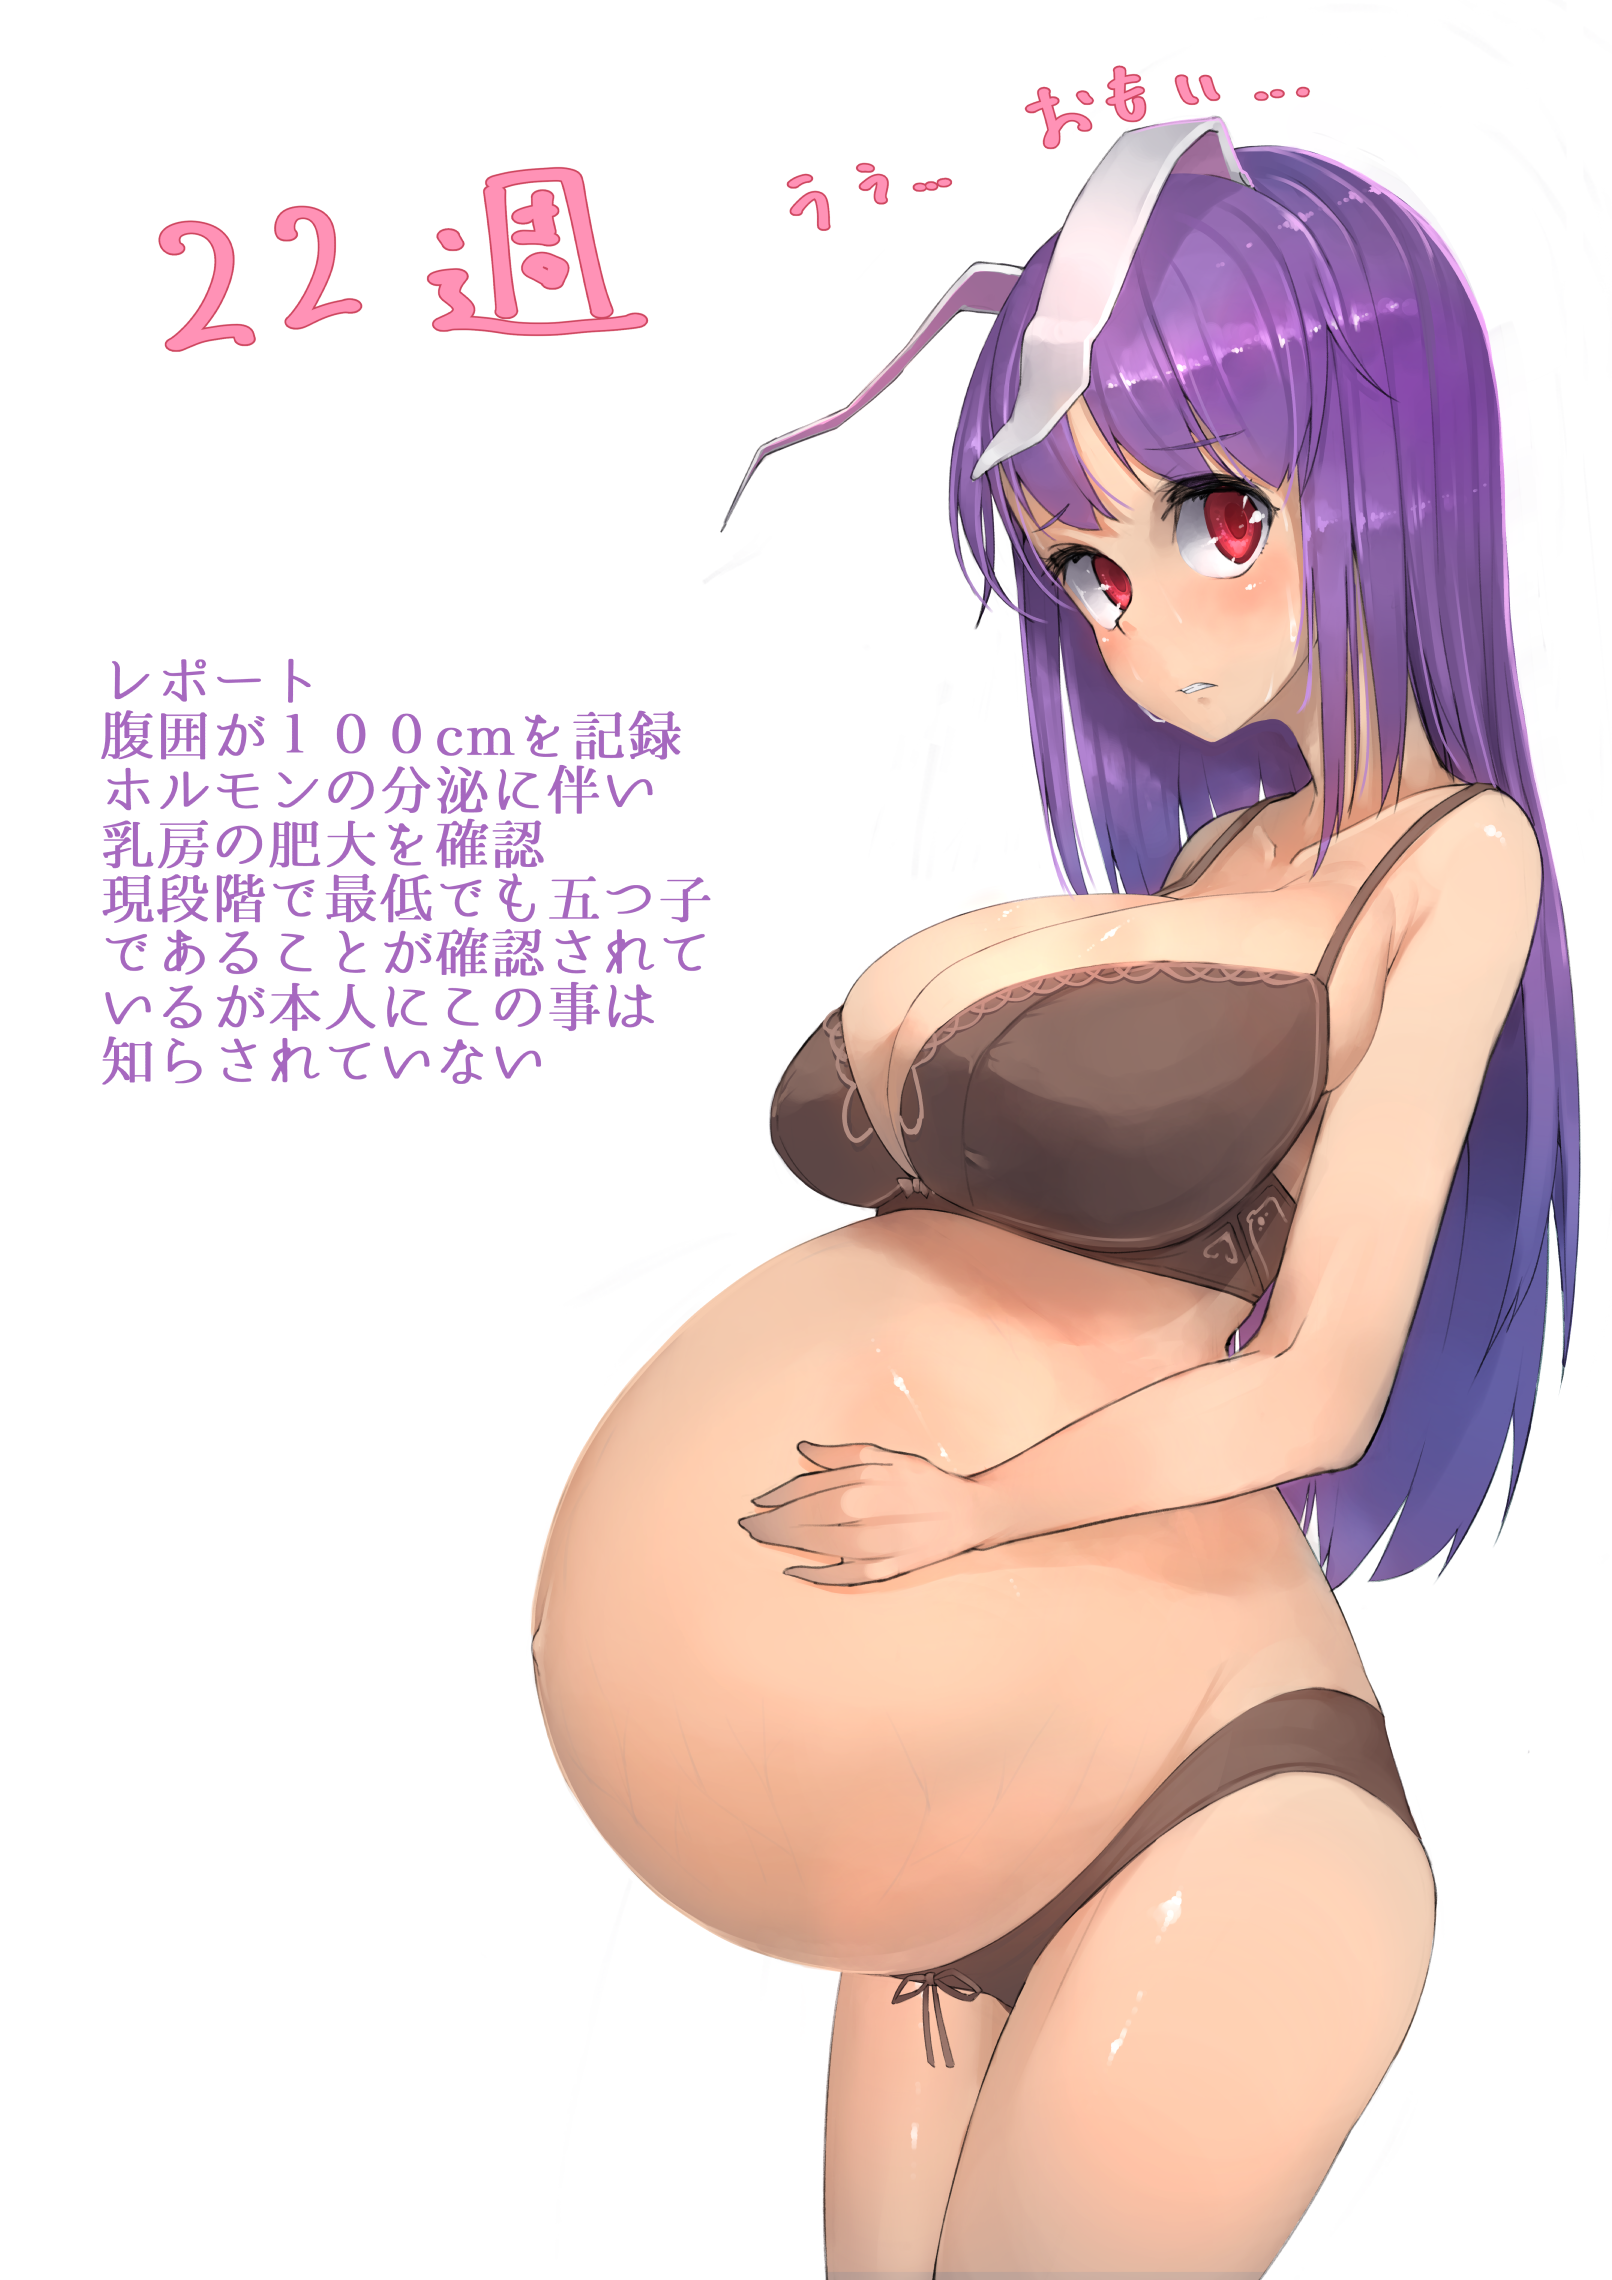 ...touhou, japanese text, big breasts, bra, bunny ears, long hair, looking ...